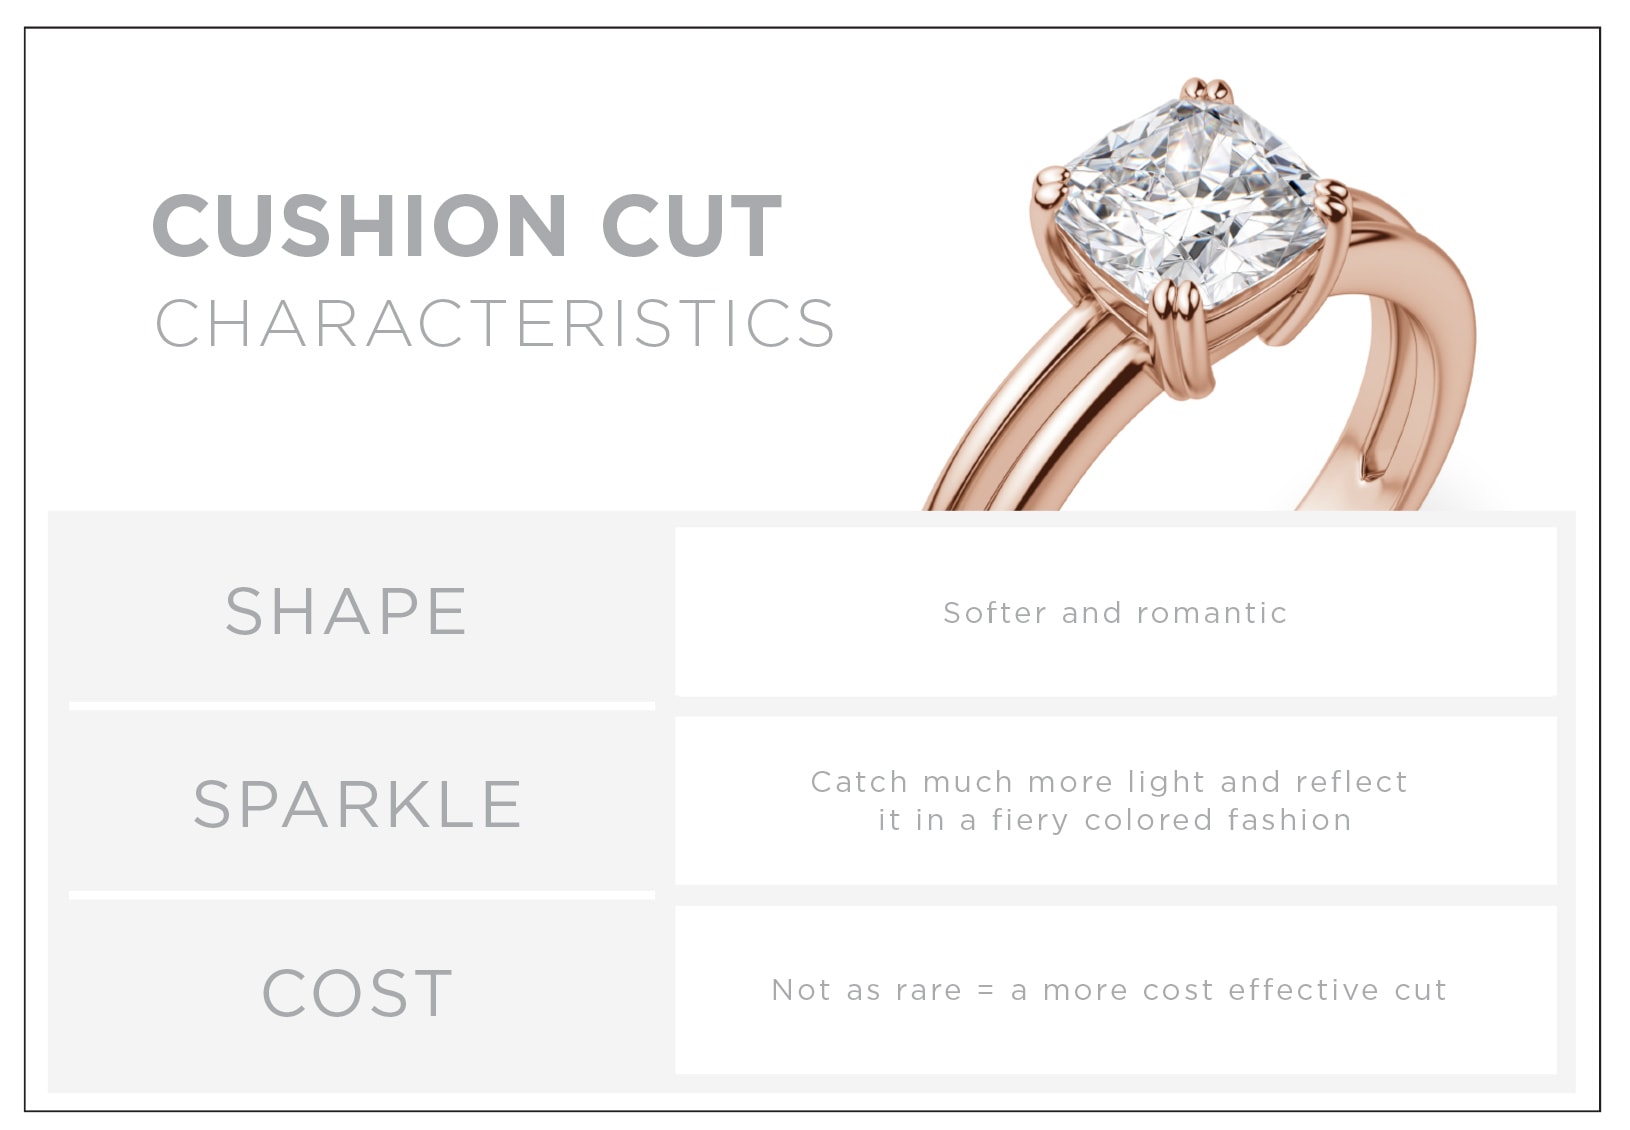 Characteristics of a cushion cut diamond